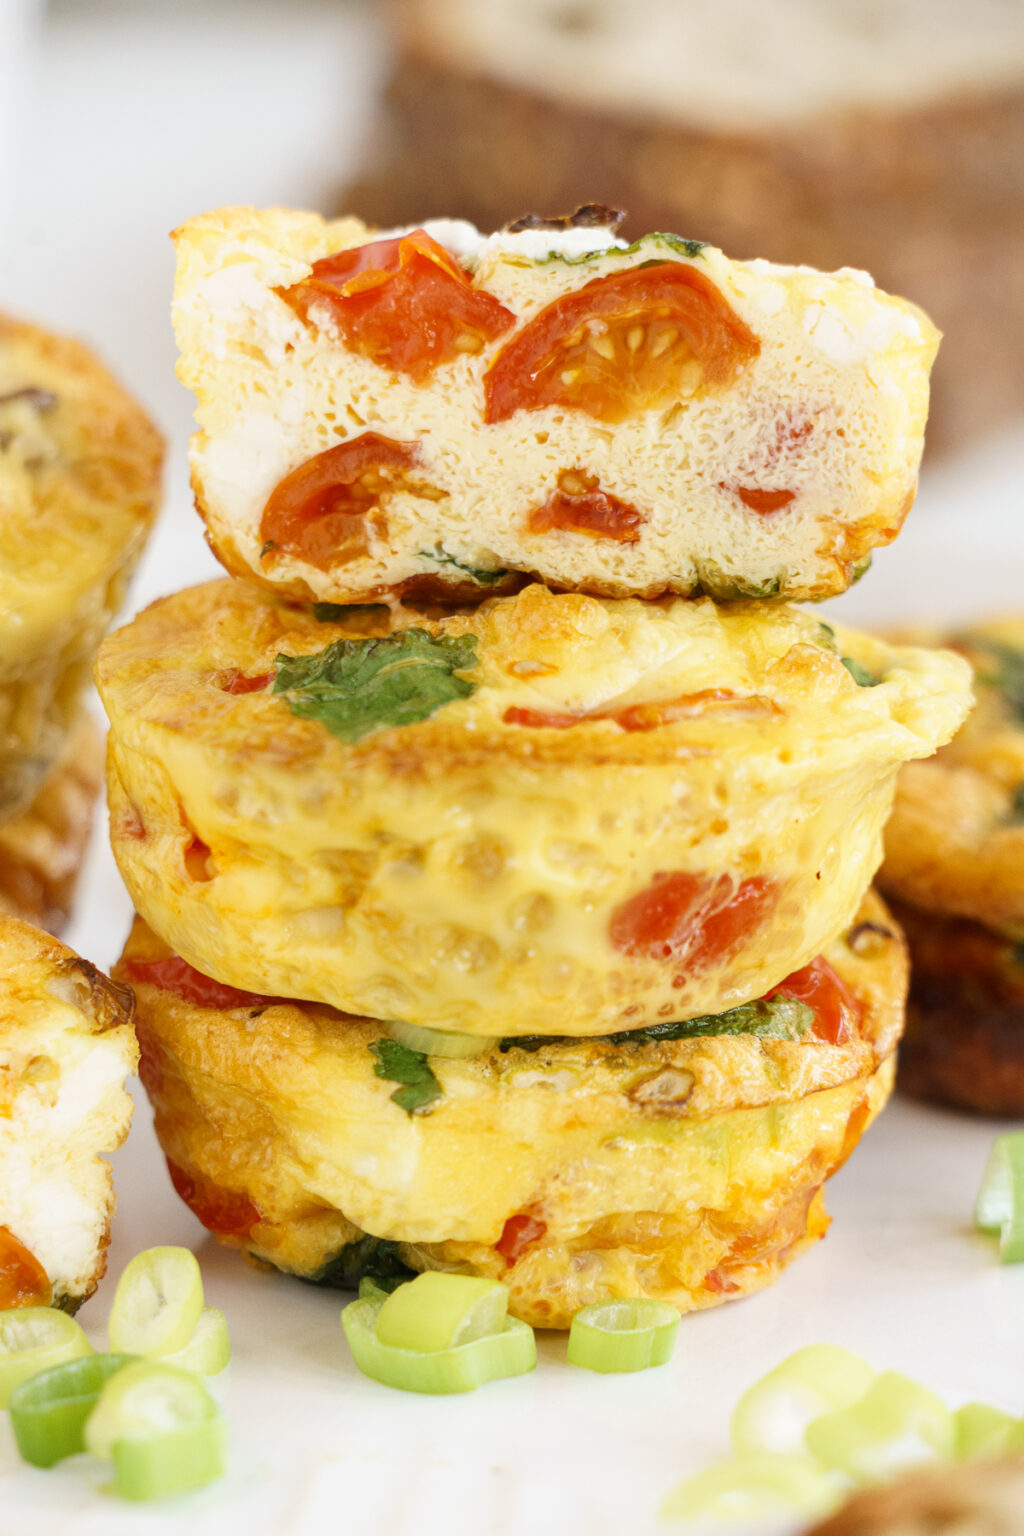 Healthy Egg Muffins (3 Easy Ways) - Gathering Dreams